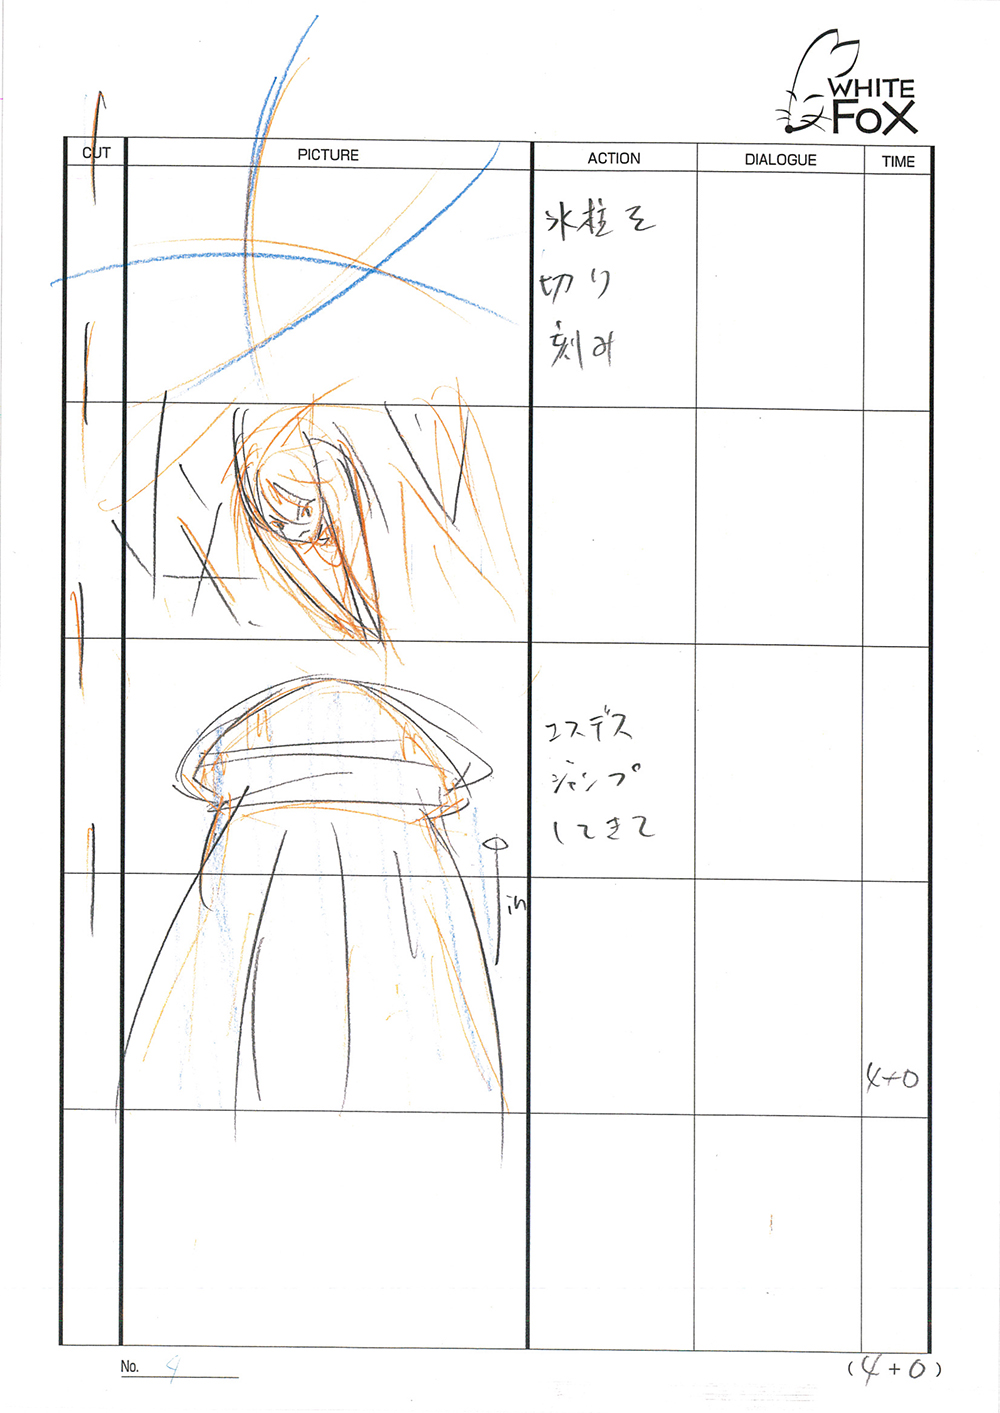 Akame ga Kill Episode 24 Storyboard Leak 043